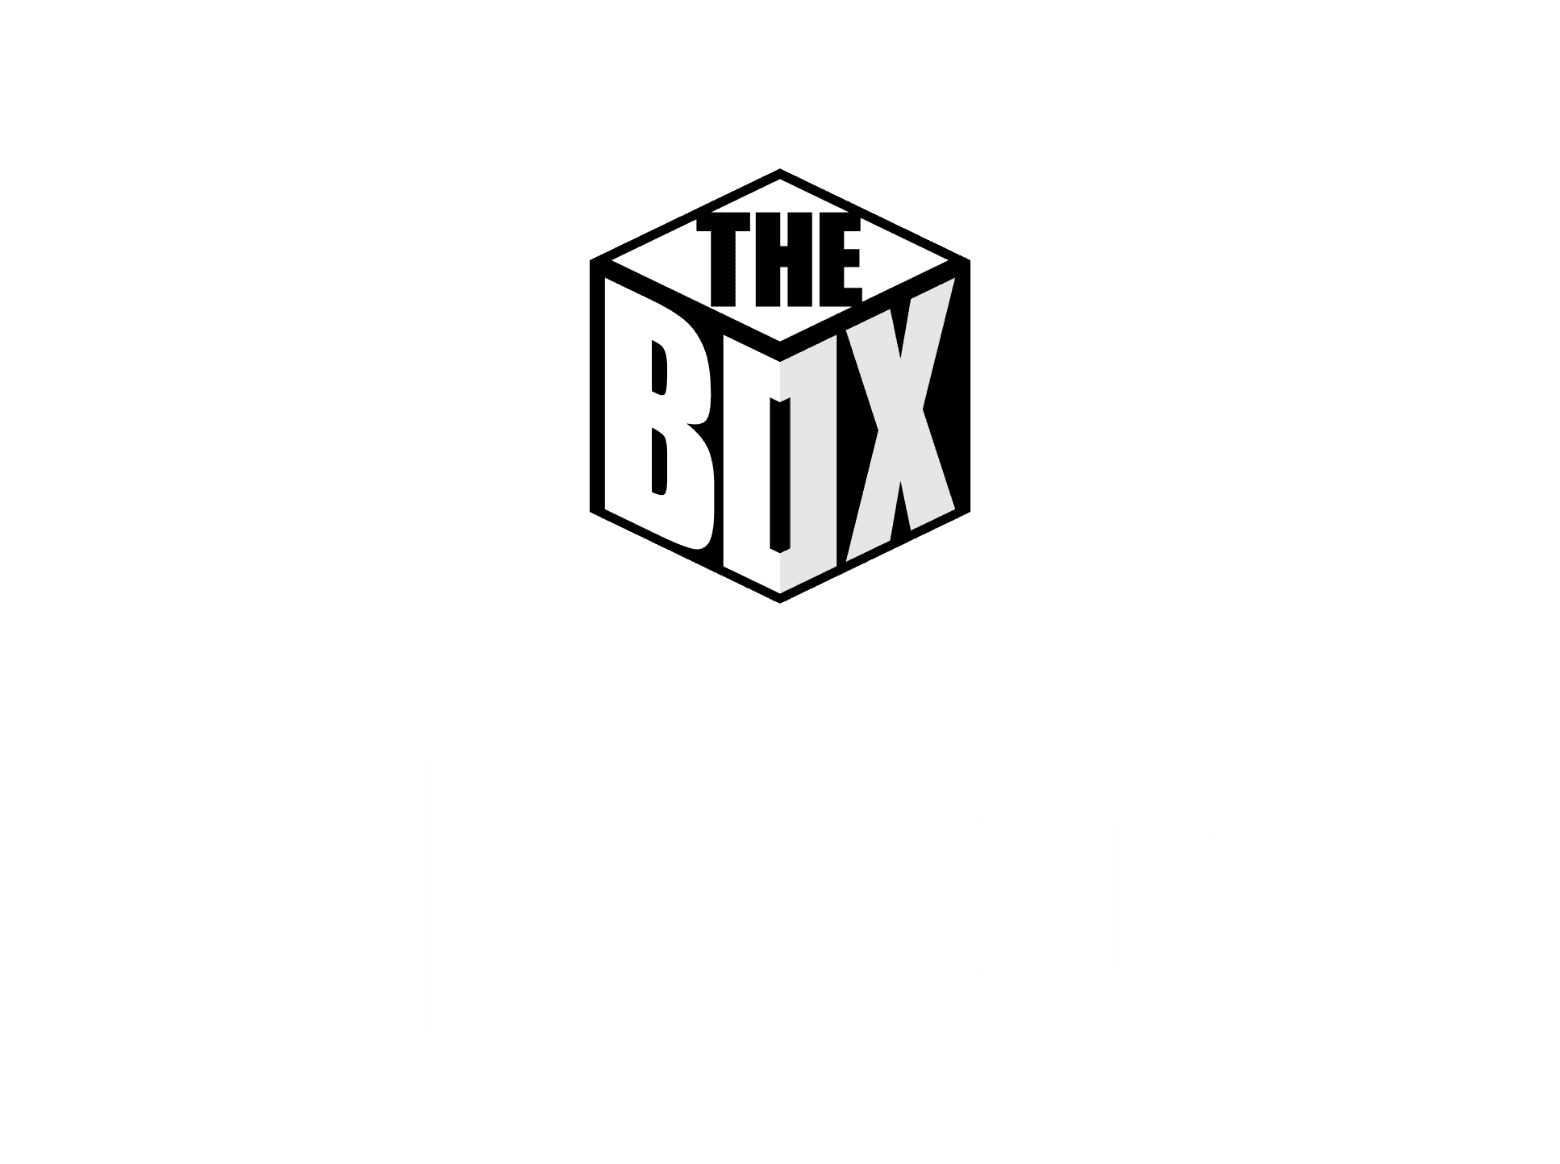 THE BOXイメージ写真